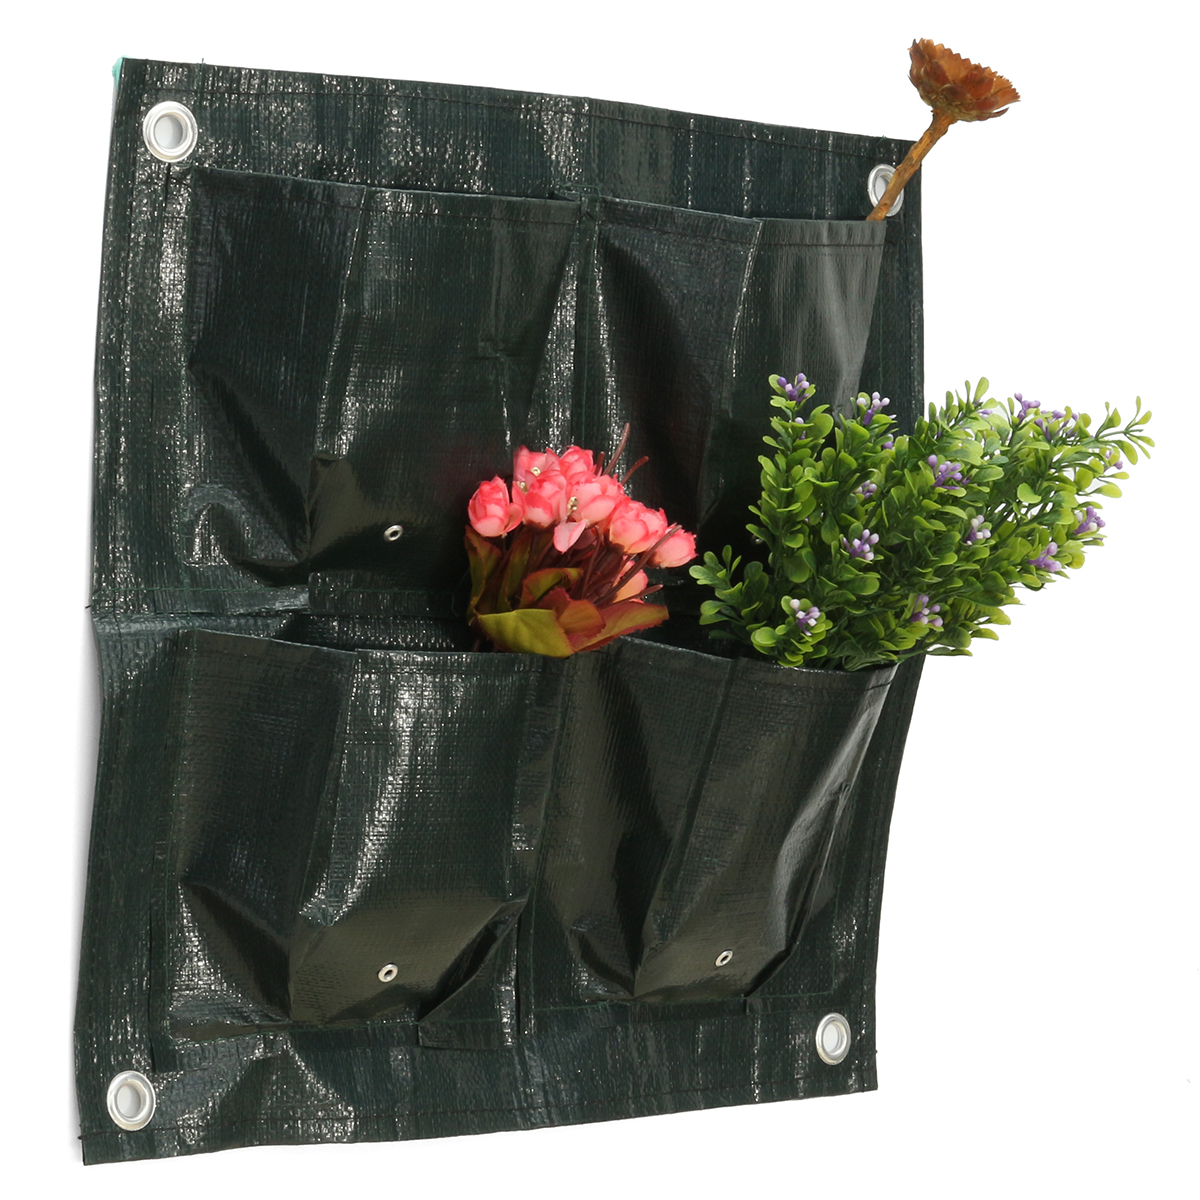 4-Pockets-Home-Garden-Balcony-Plant-Bags-Hanging-Flower-Pot-PE-Planting-Grow-Bag-1254017-2